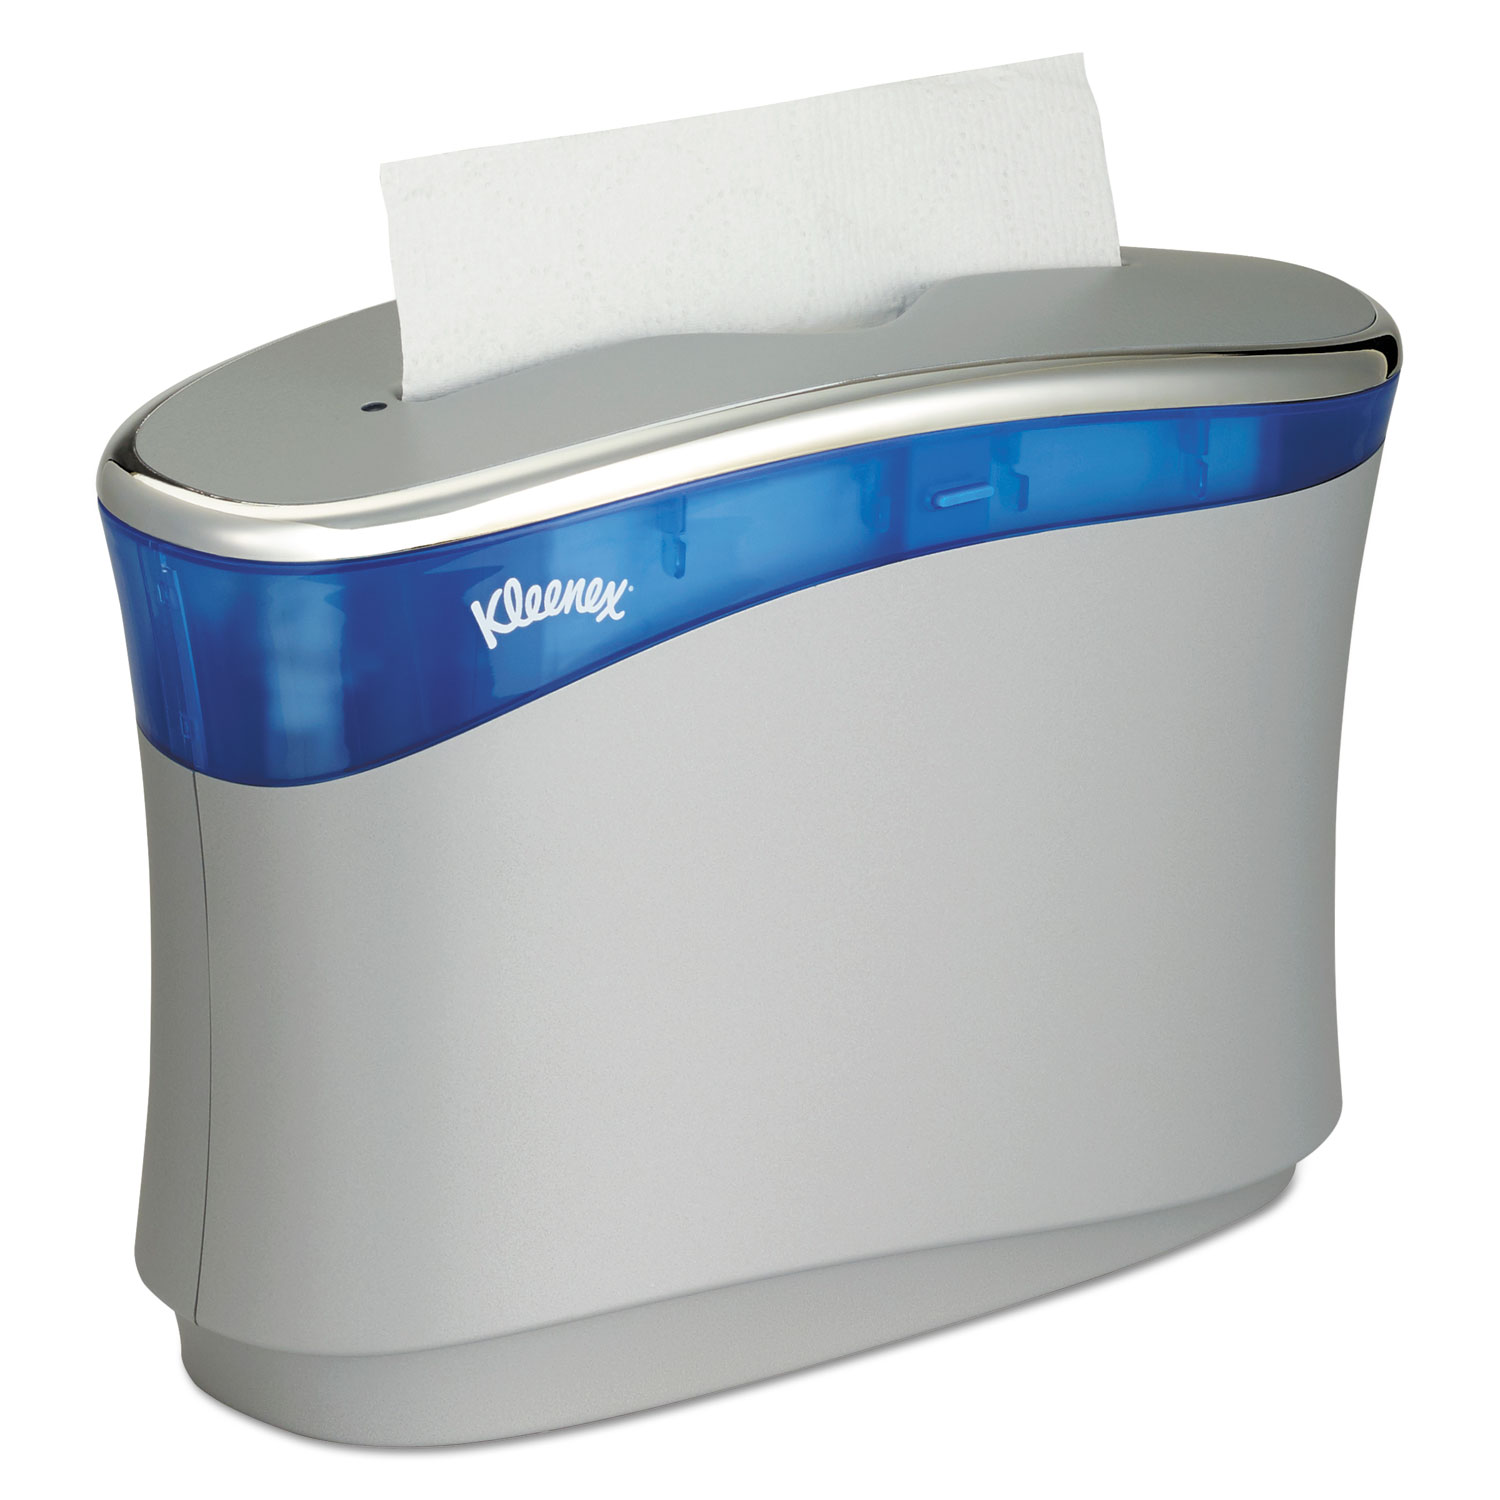  Kleenex 51904 Reveal Countertop Folded Towel Dispenser, 13.3x9x5.2, Soft Gray/Translucent Blue (KCC51904) 